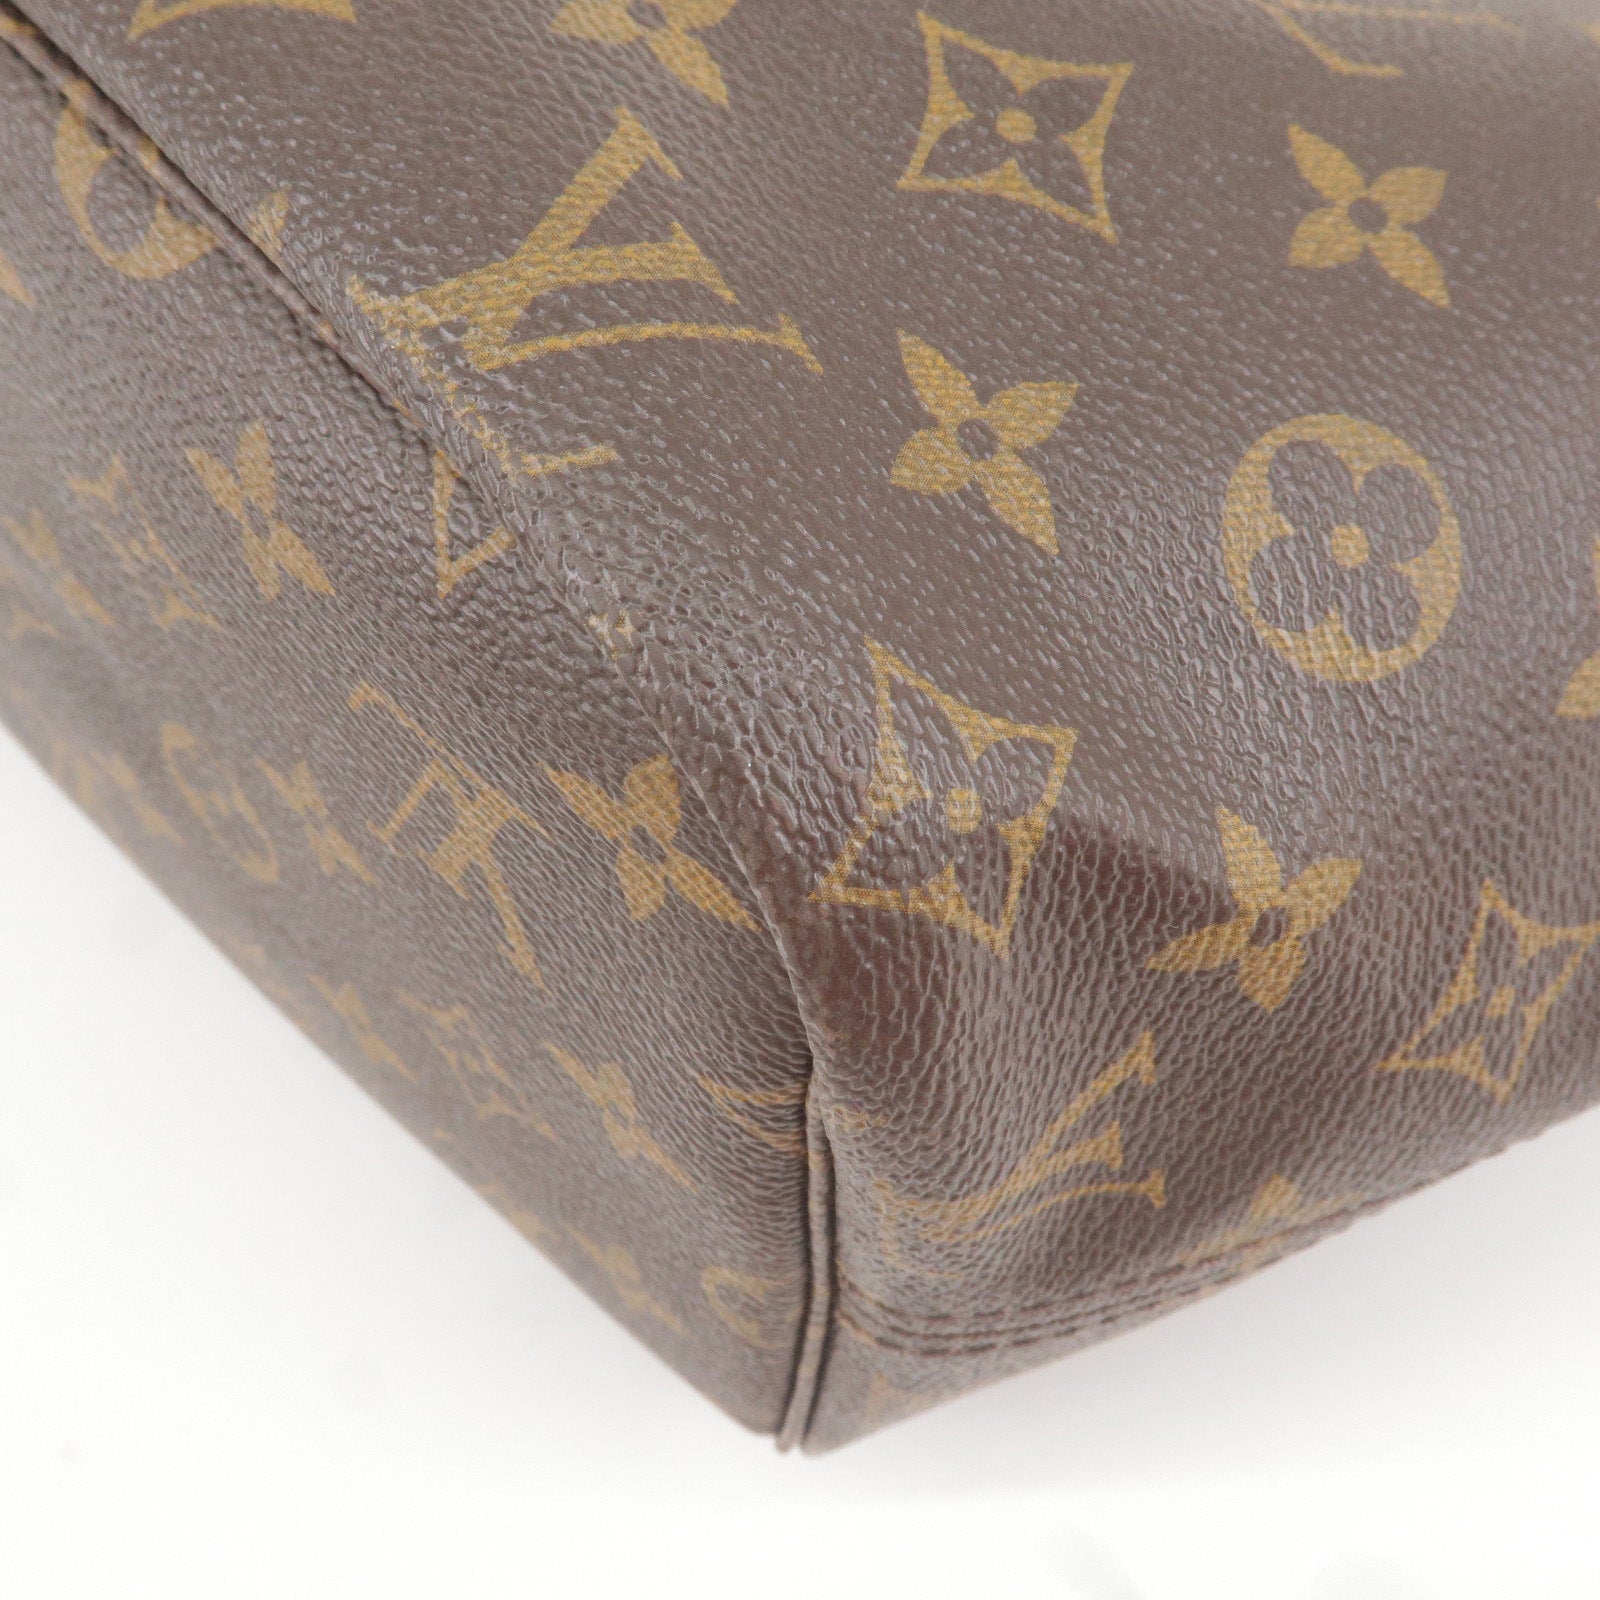 Louis Vuitton Monogram Neverfull MM Tote Bag Hand Bag M40995